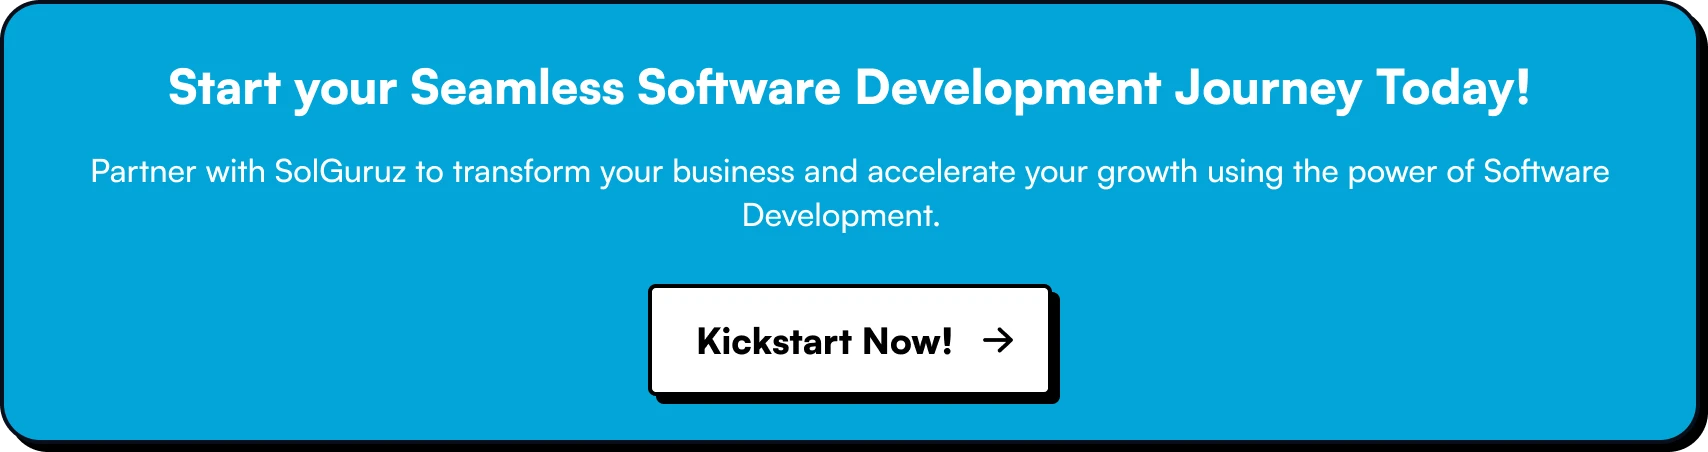 Start your Seamless Software Development Journey Today!